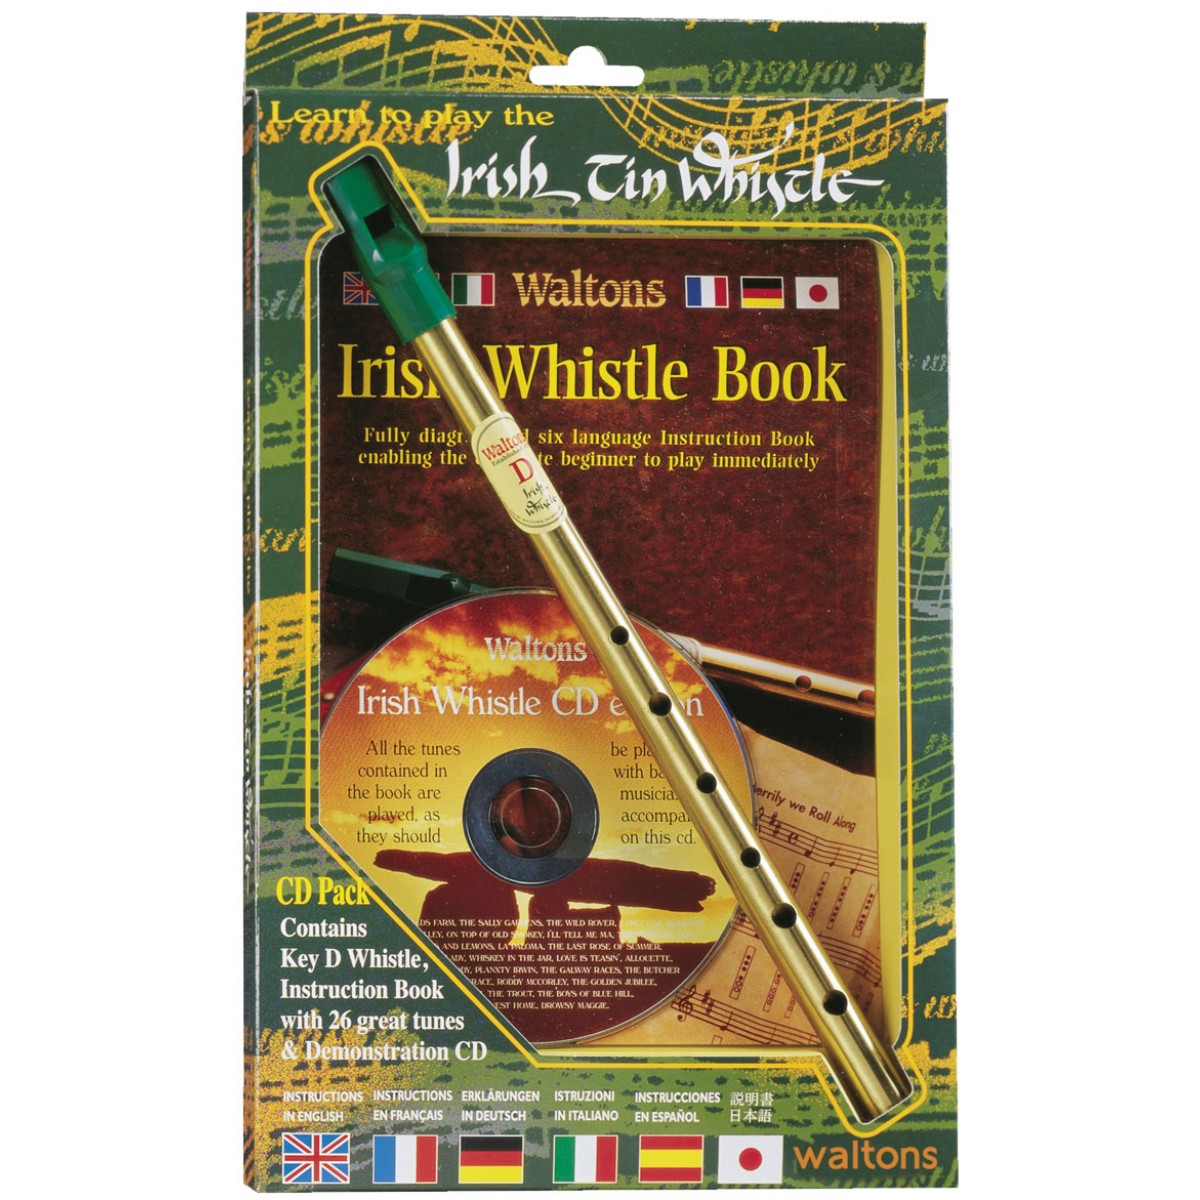 Irish Tin Whistle CD Pack by Waltons